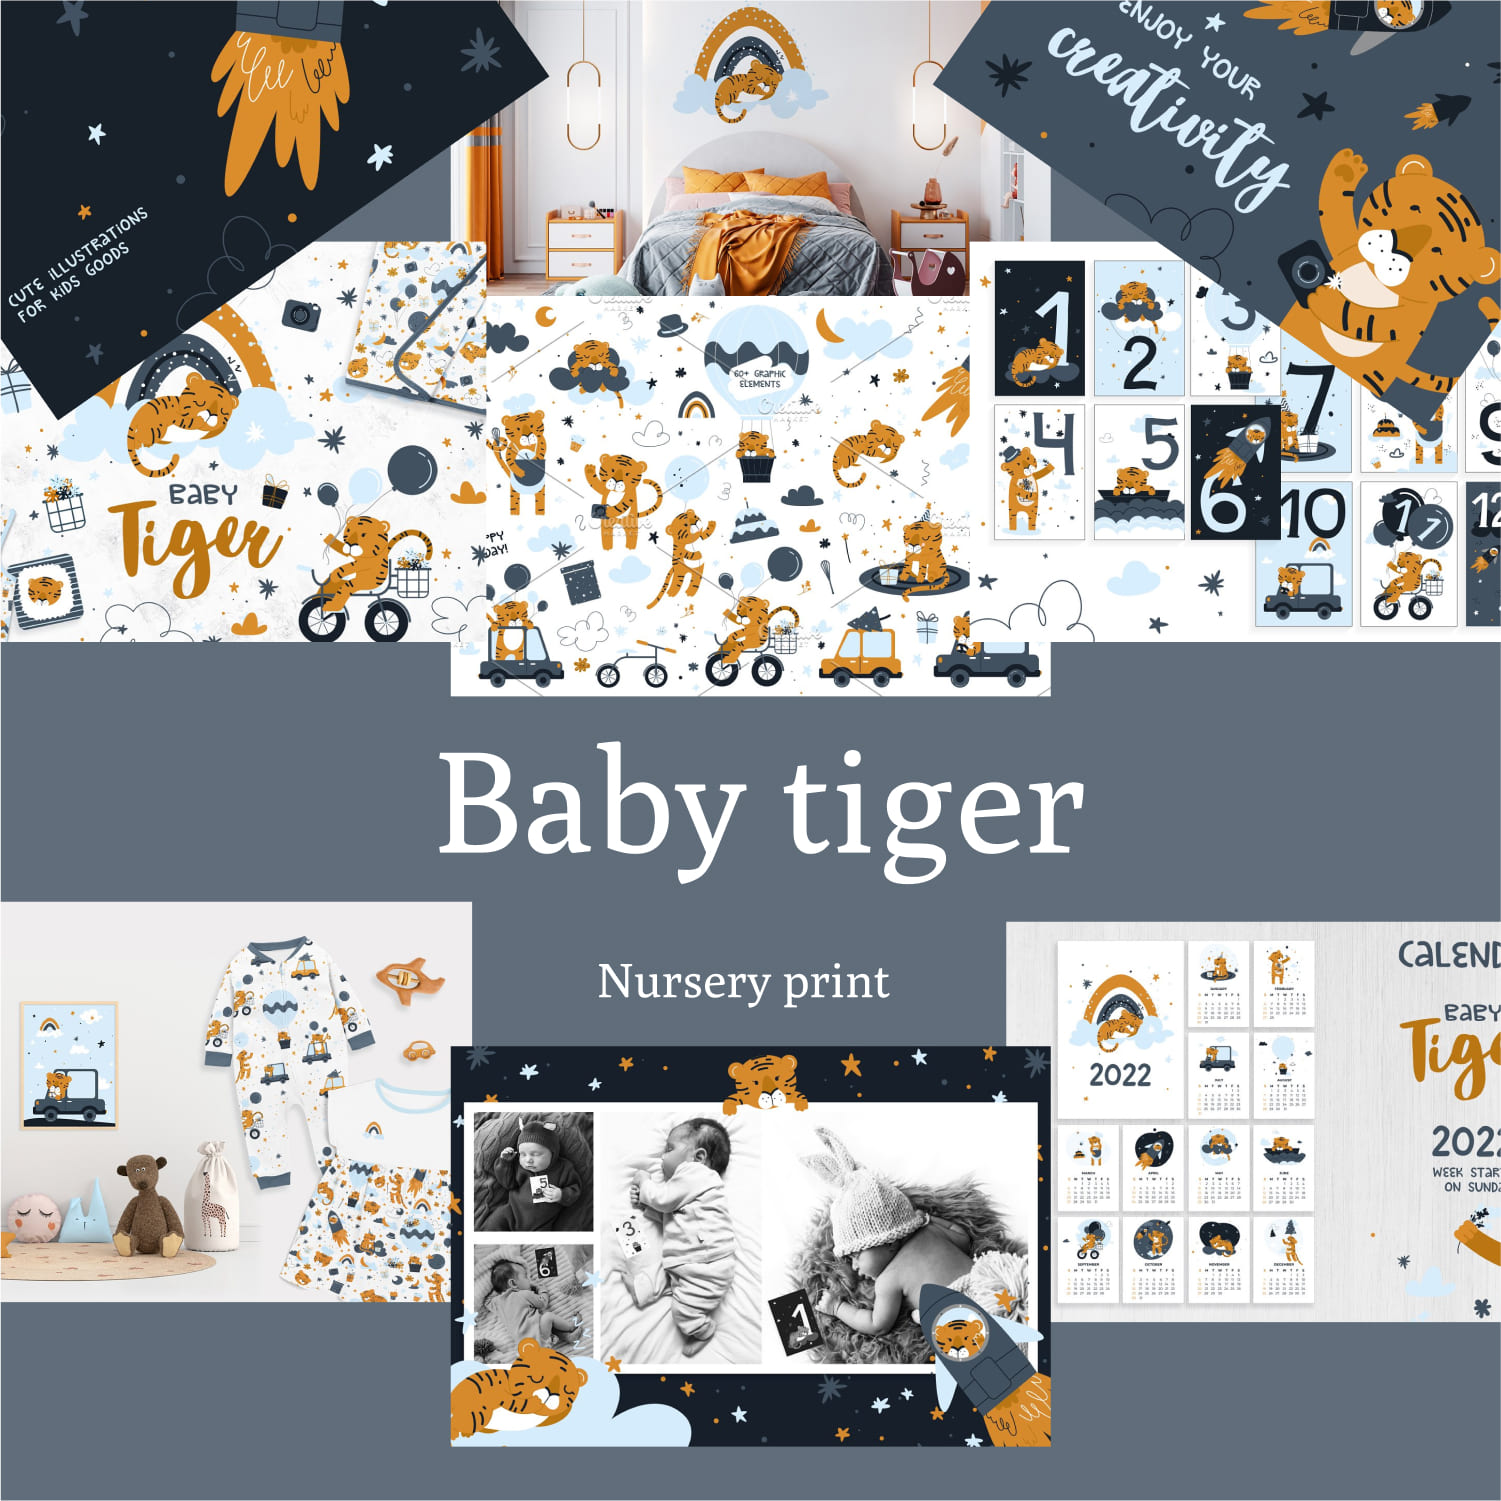 Baby tiger. Nursery print.